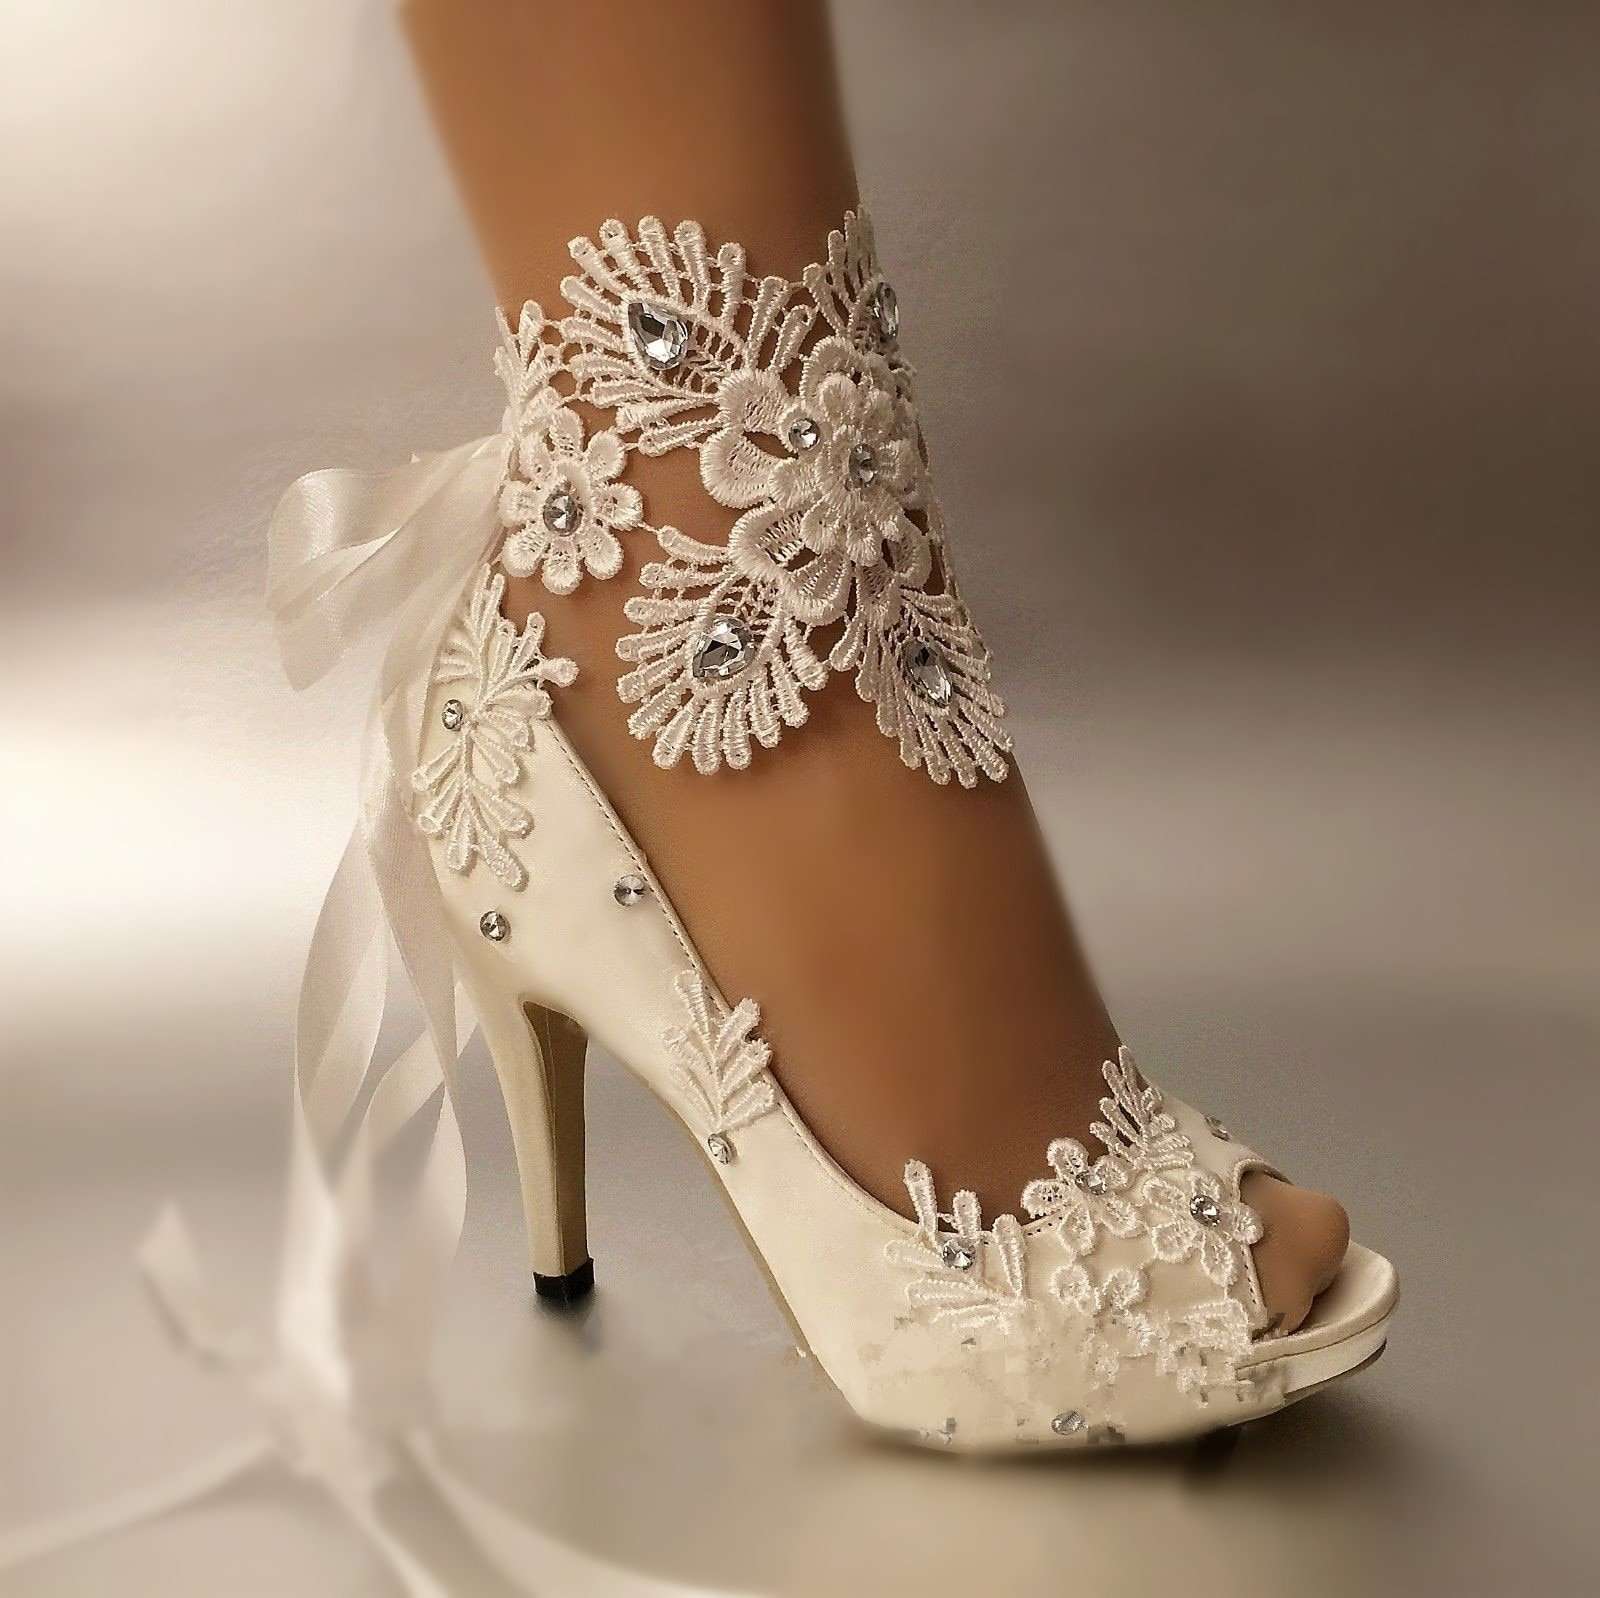 Aliexpress.com : Buy Dress Shoes Women Pumps Open toe lace ...